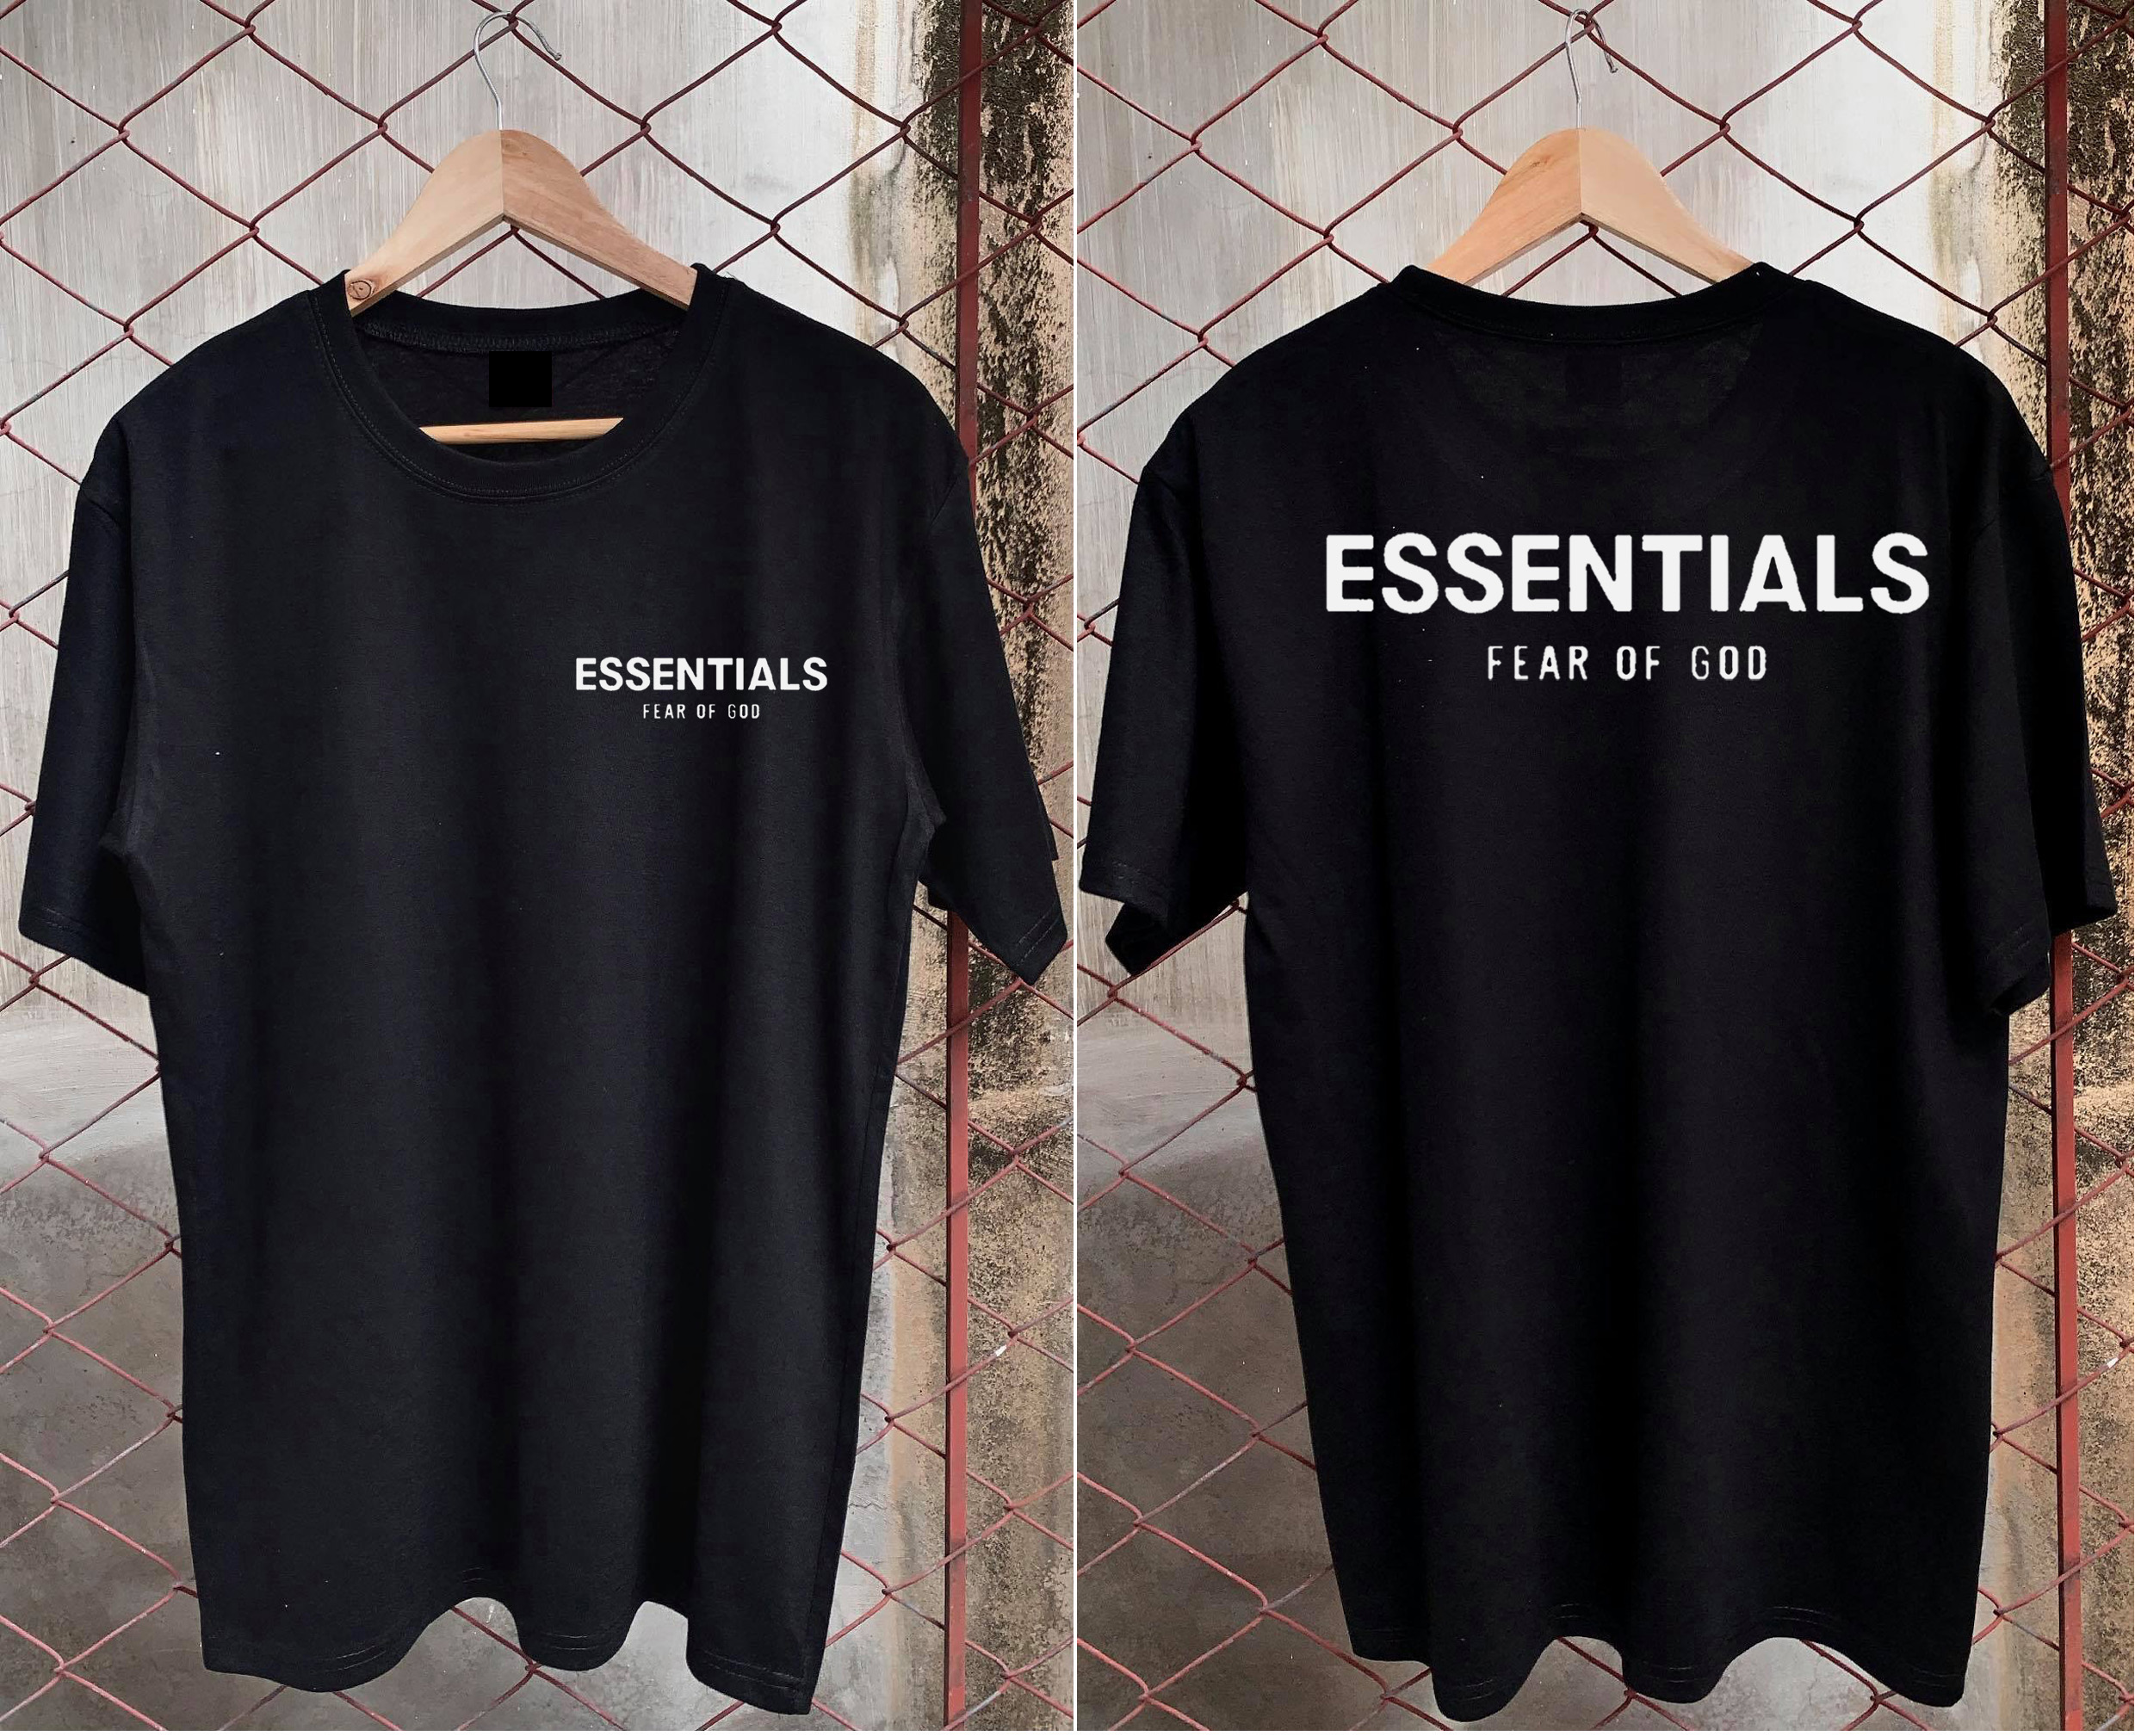 QWERTYUIOPASDFGHJKLZXCVBNM | Essential T-Shirt